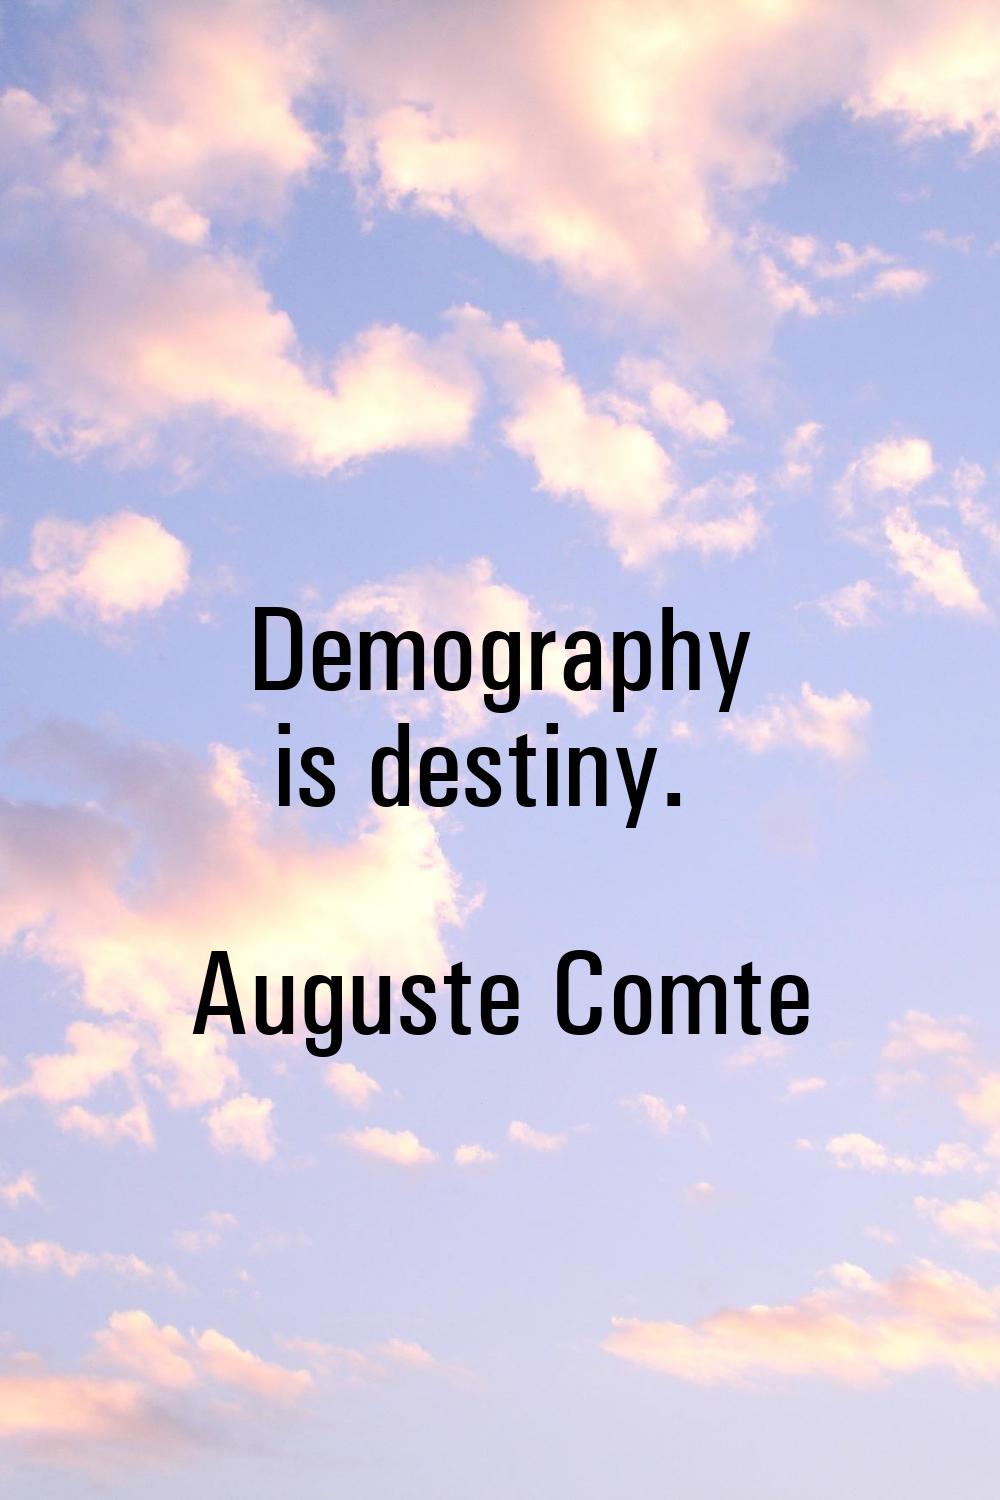 Demography is destiny.